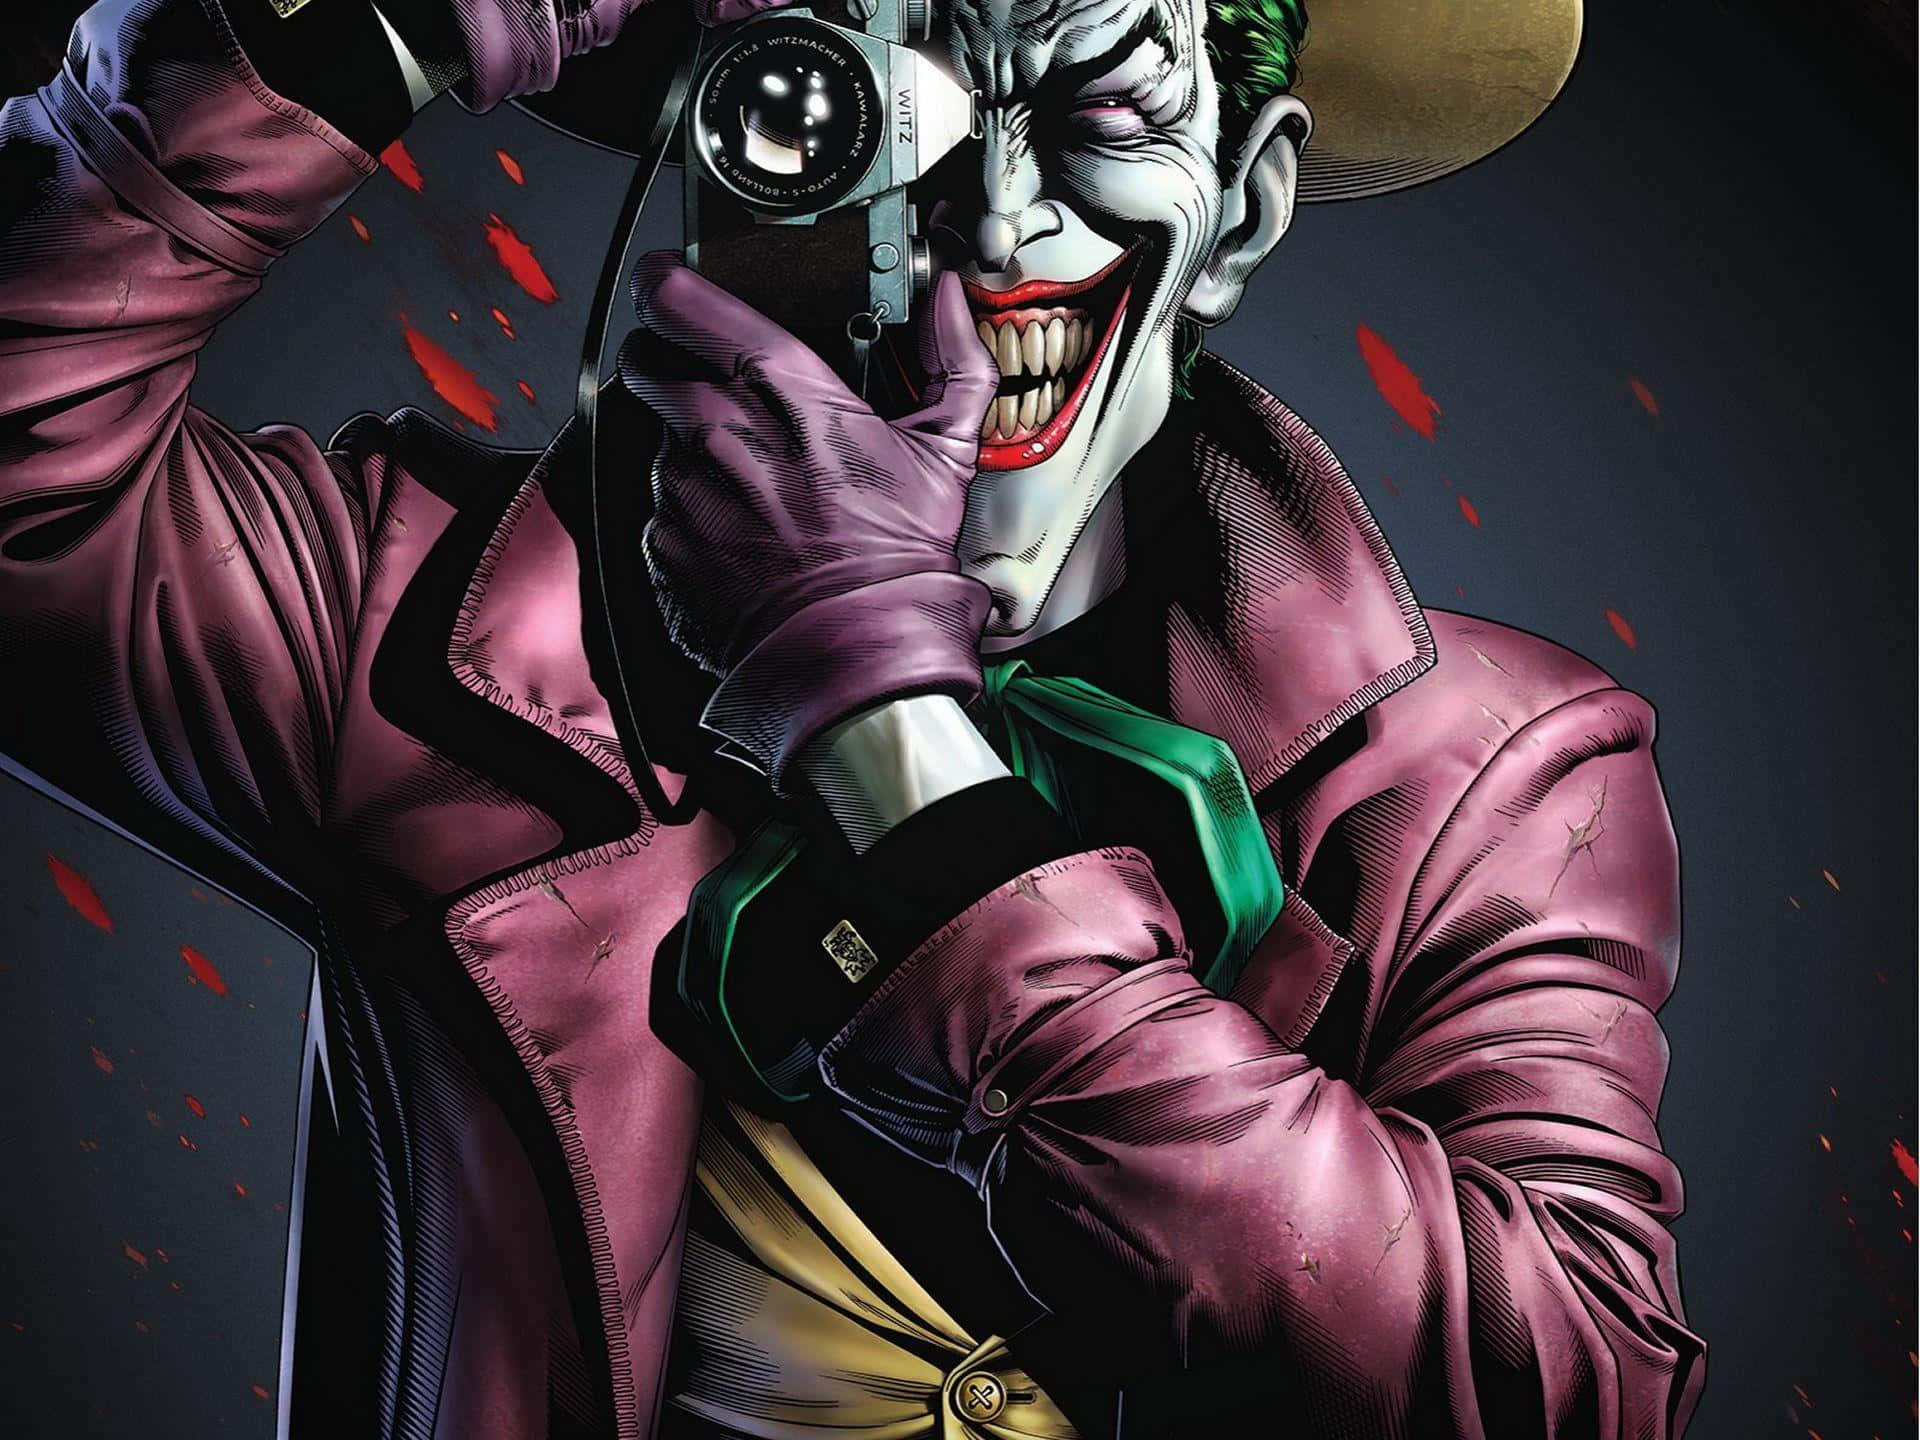 Joker's Iconic Maniacal Laugh